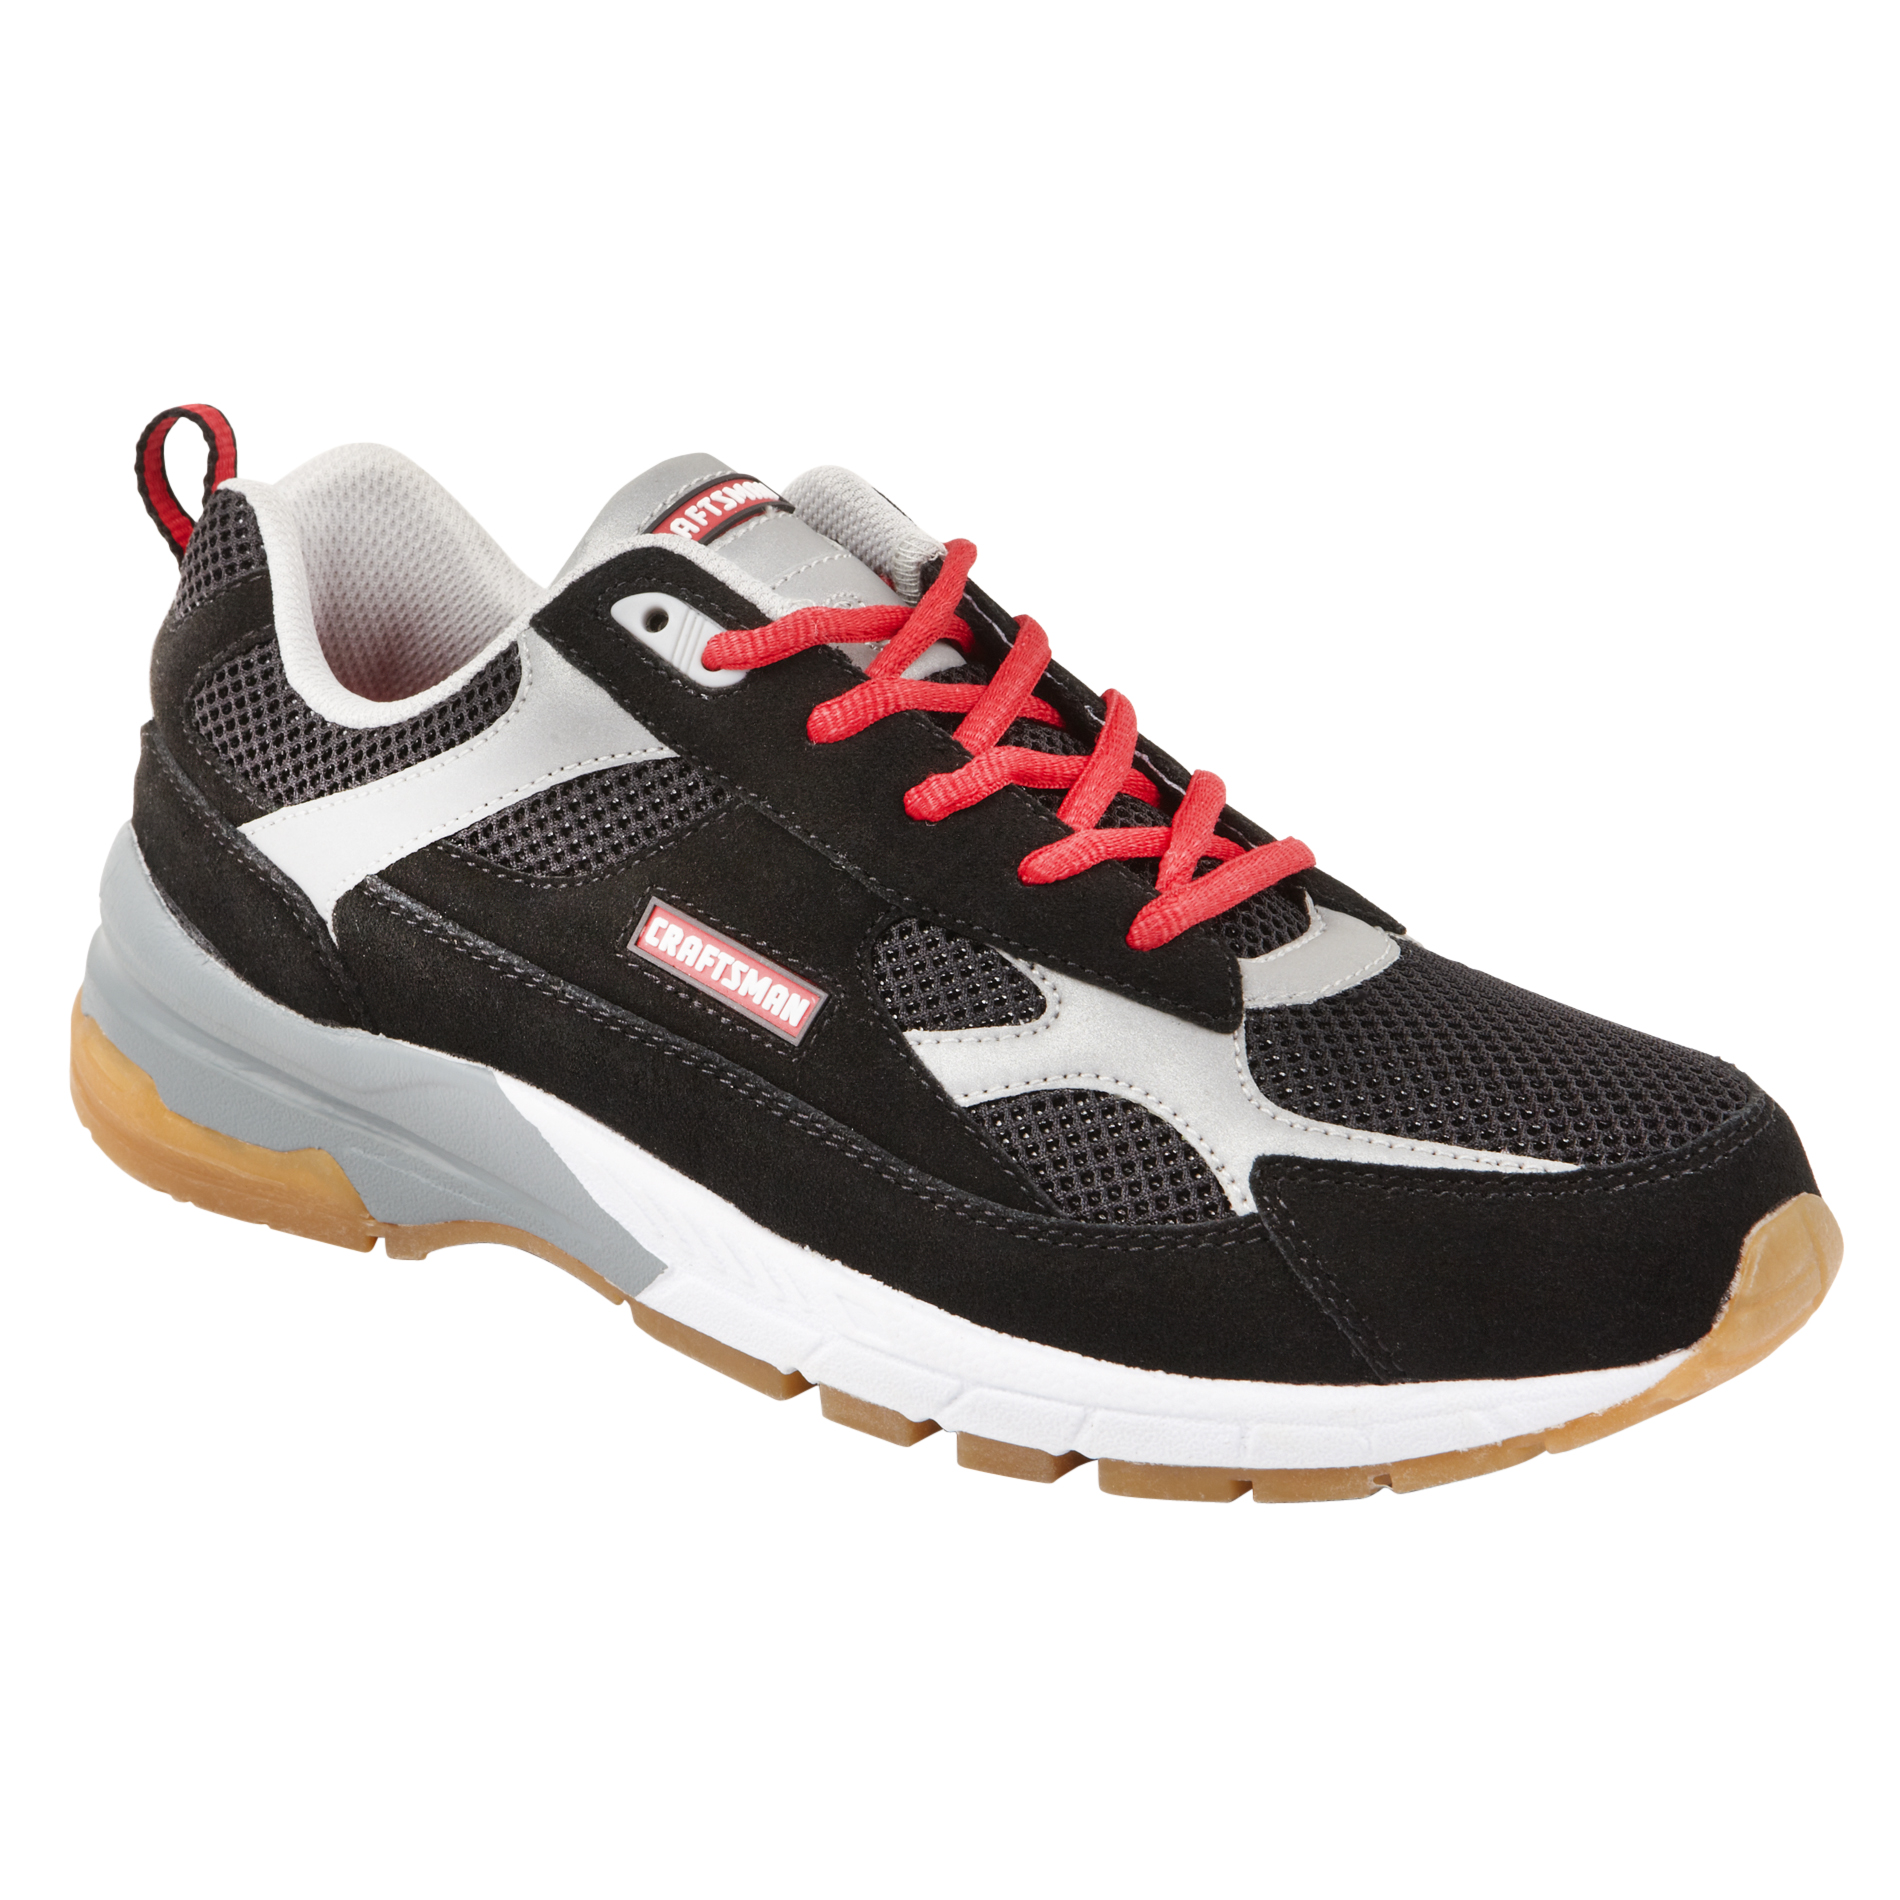 Craftsman Men's Athletic Shoe Larry - Black/Red/White